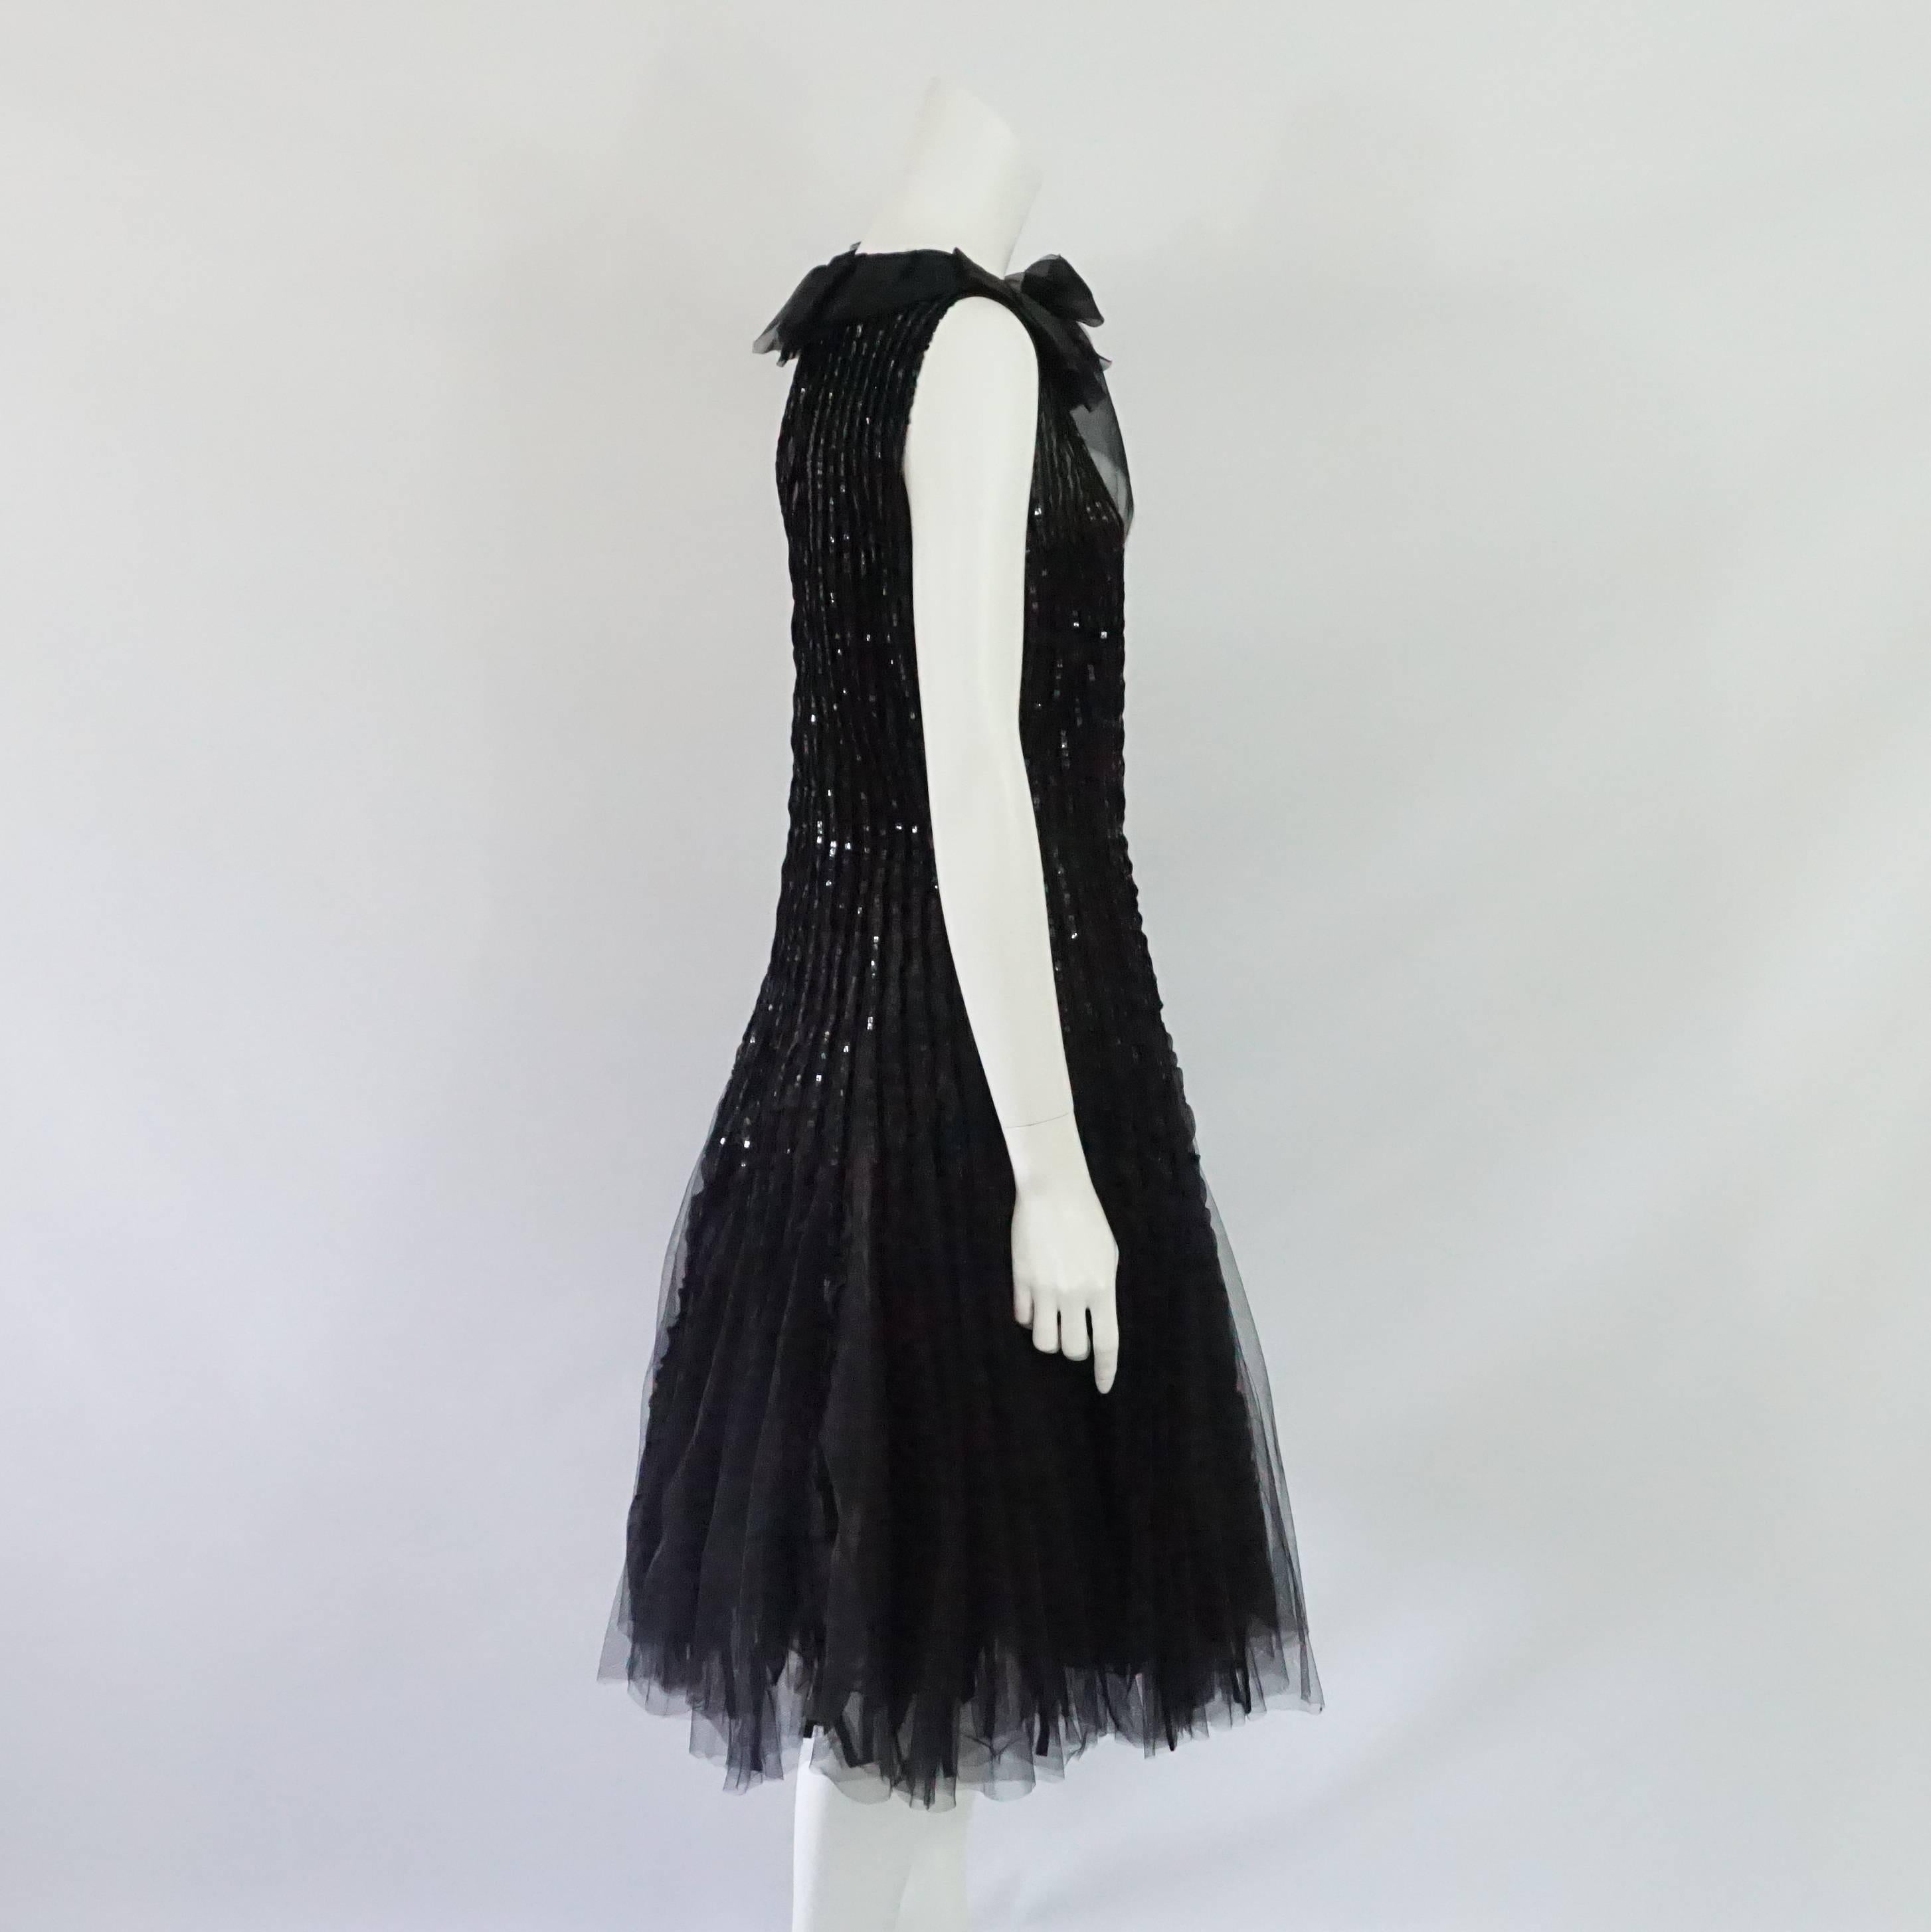 Oscar de la Renta Black Tulle, Velvet & Sequin Evening Dress - 12. This dress is a true showstopper and takes 